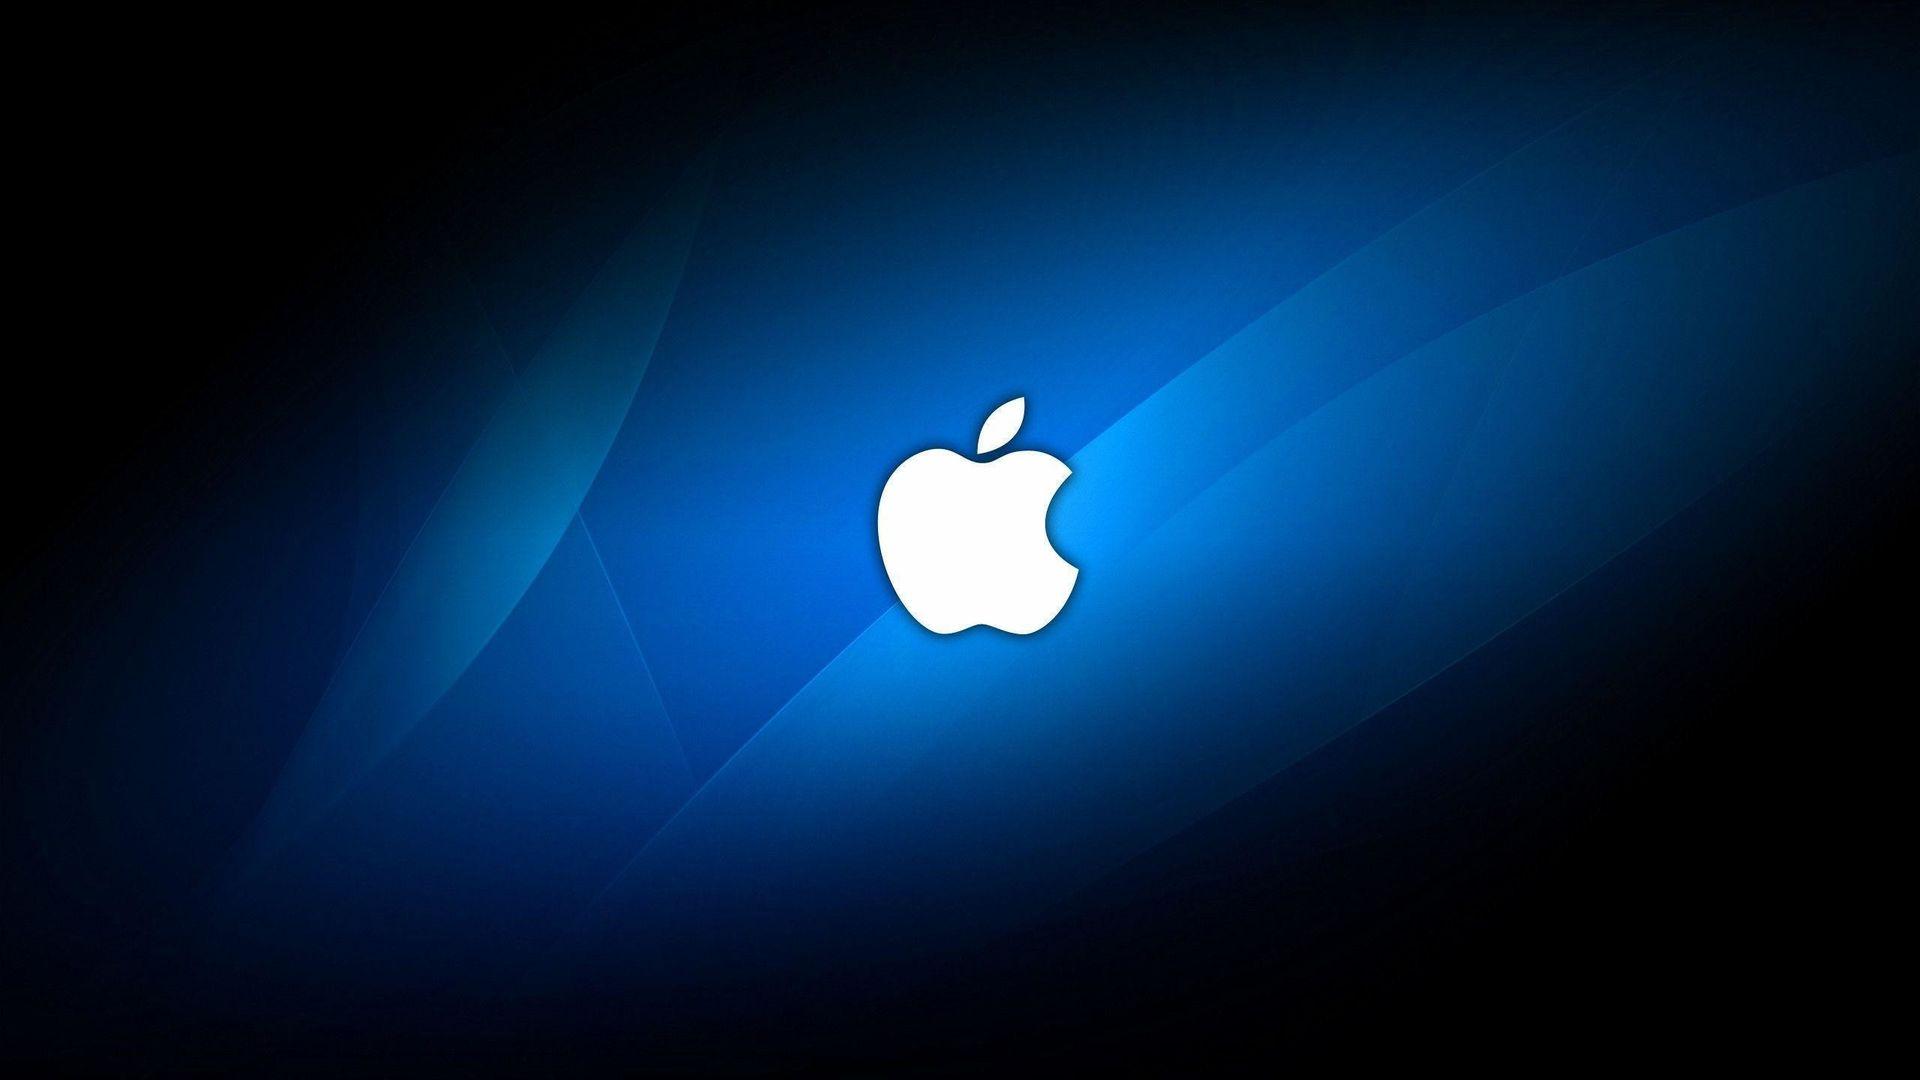 Apple Logo Dark Wallpapers - Top Free Apple Logo Dark Backgrounds ...